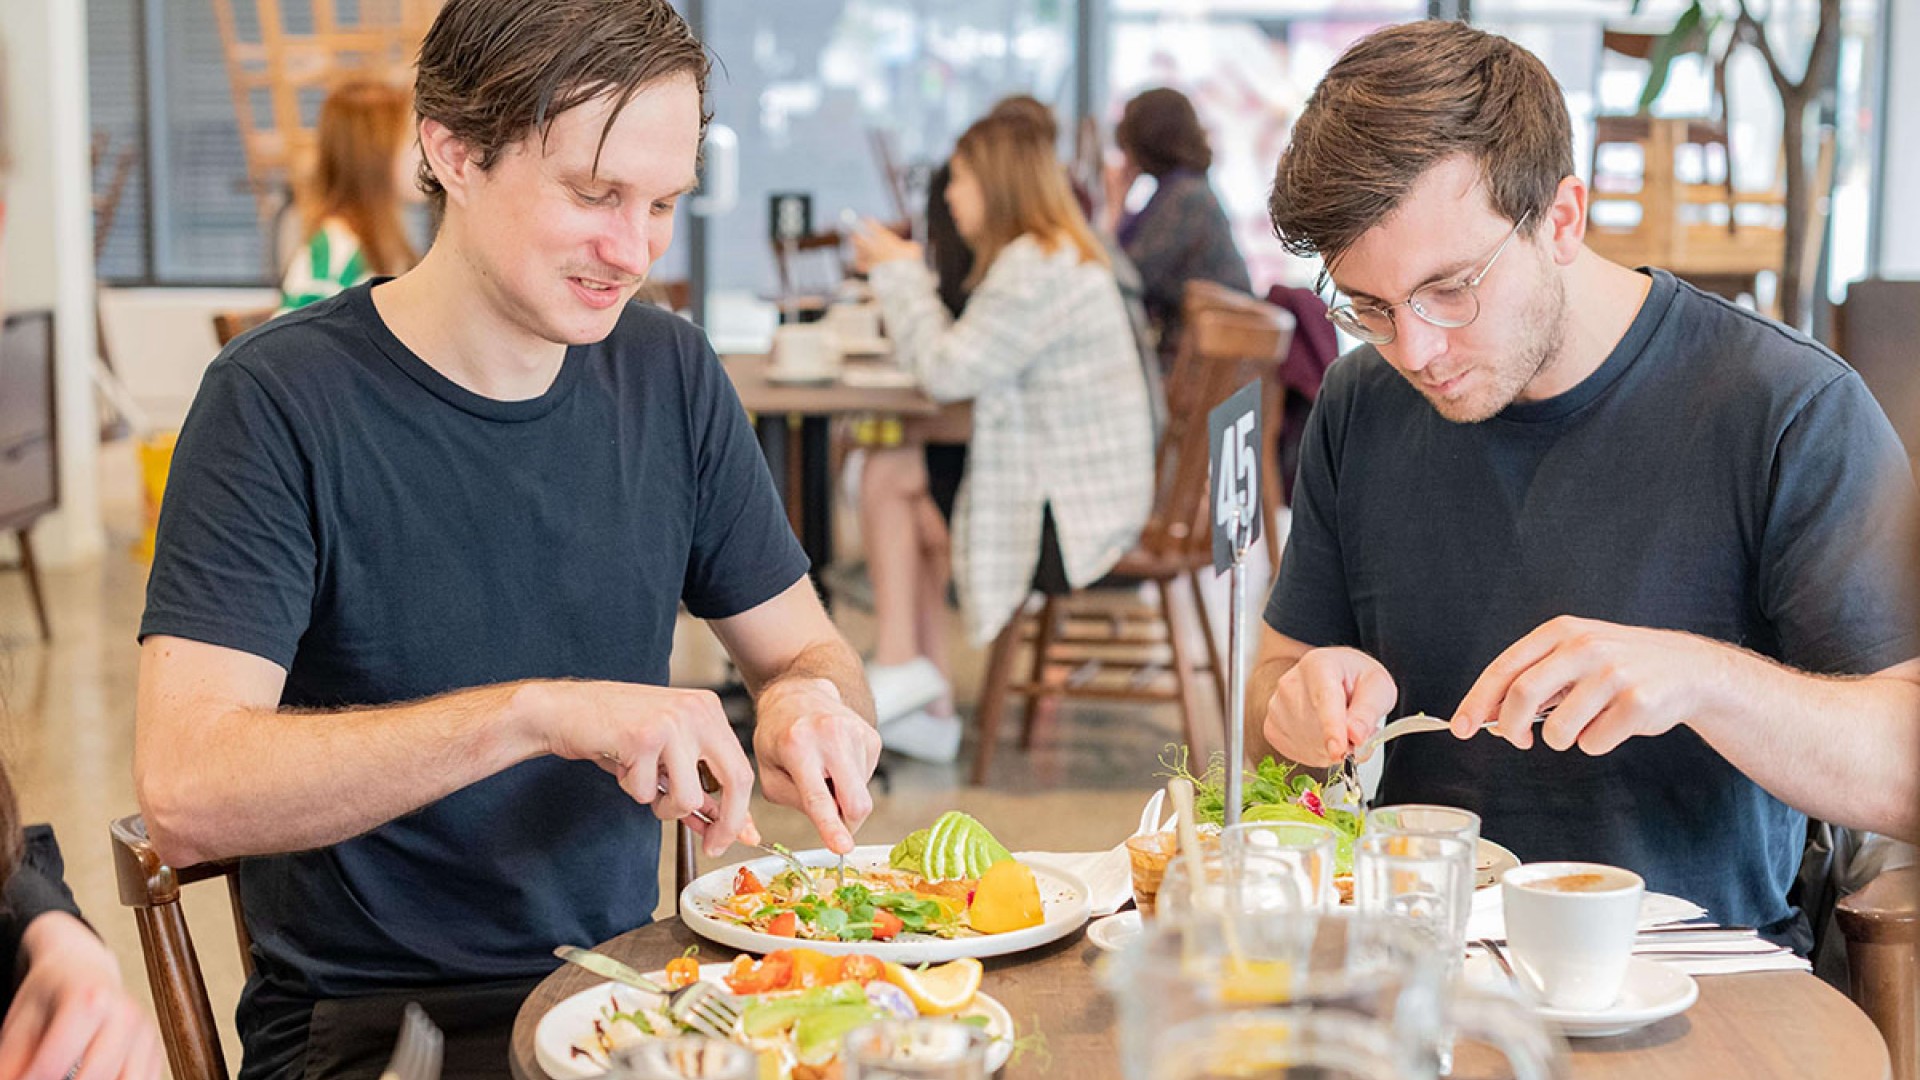 Millennials eating avocado on toast